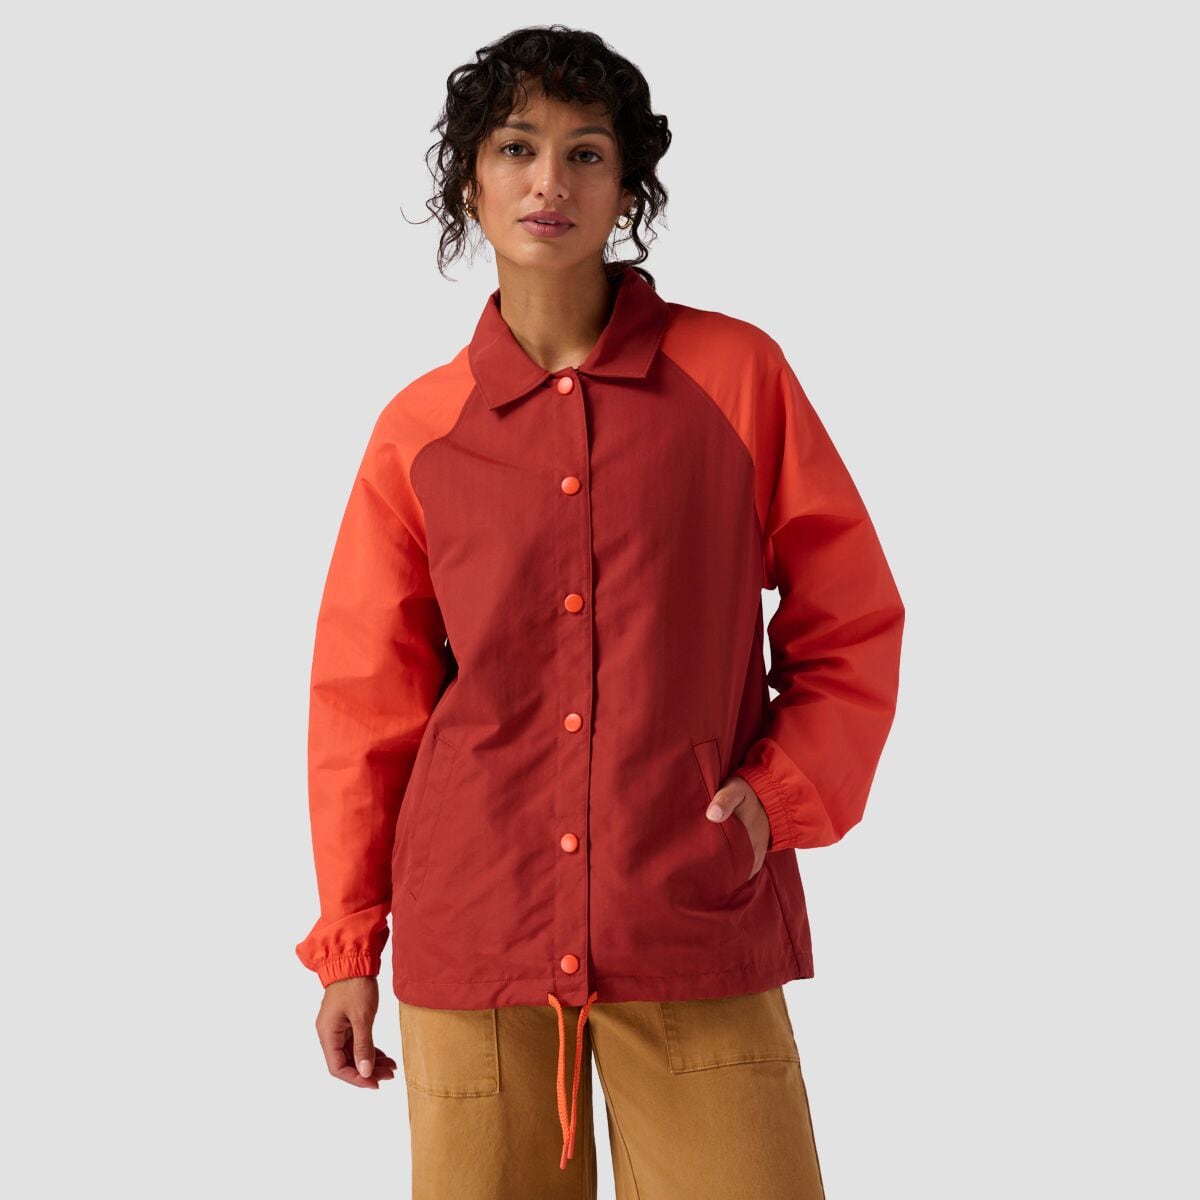 Тренерская куртка Stoic, цвет tigerlily/red ochre